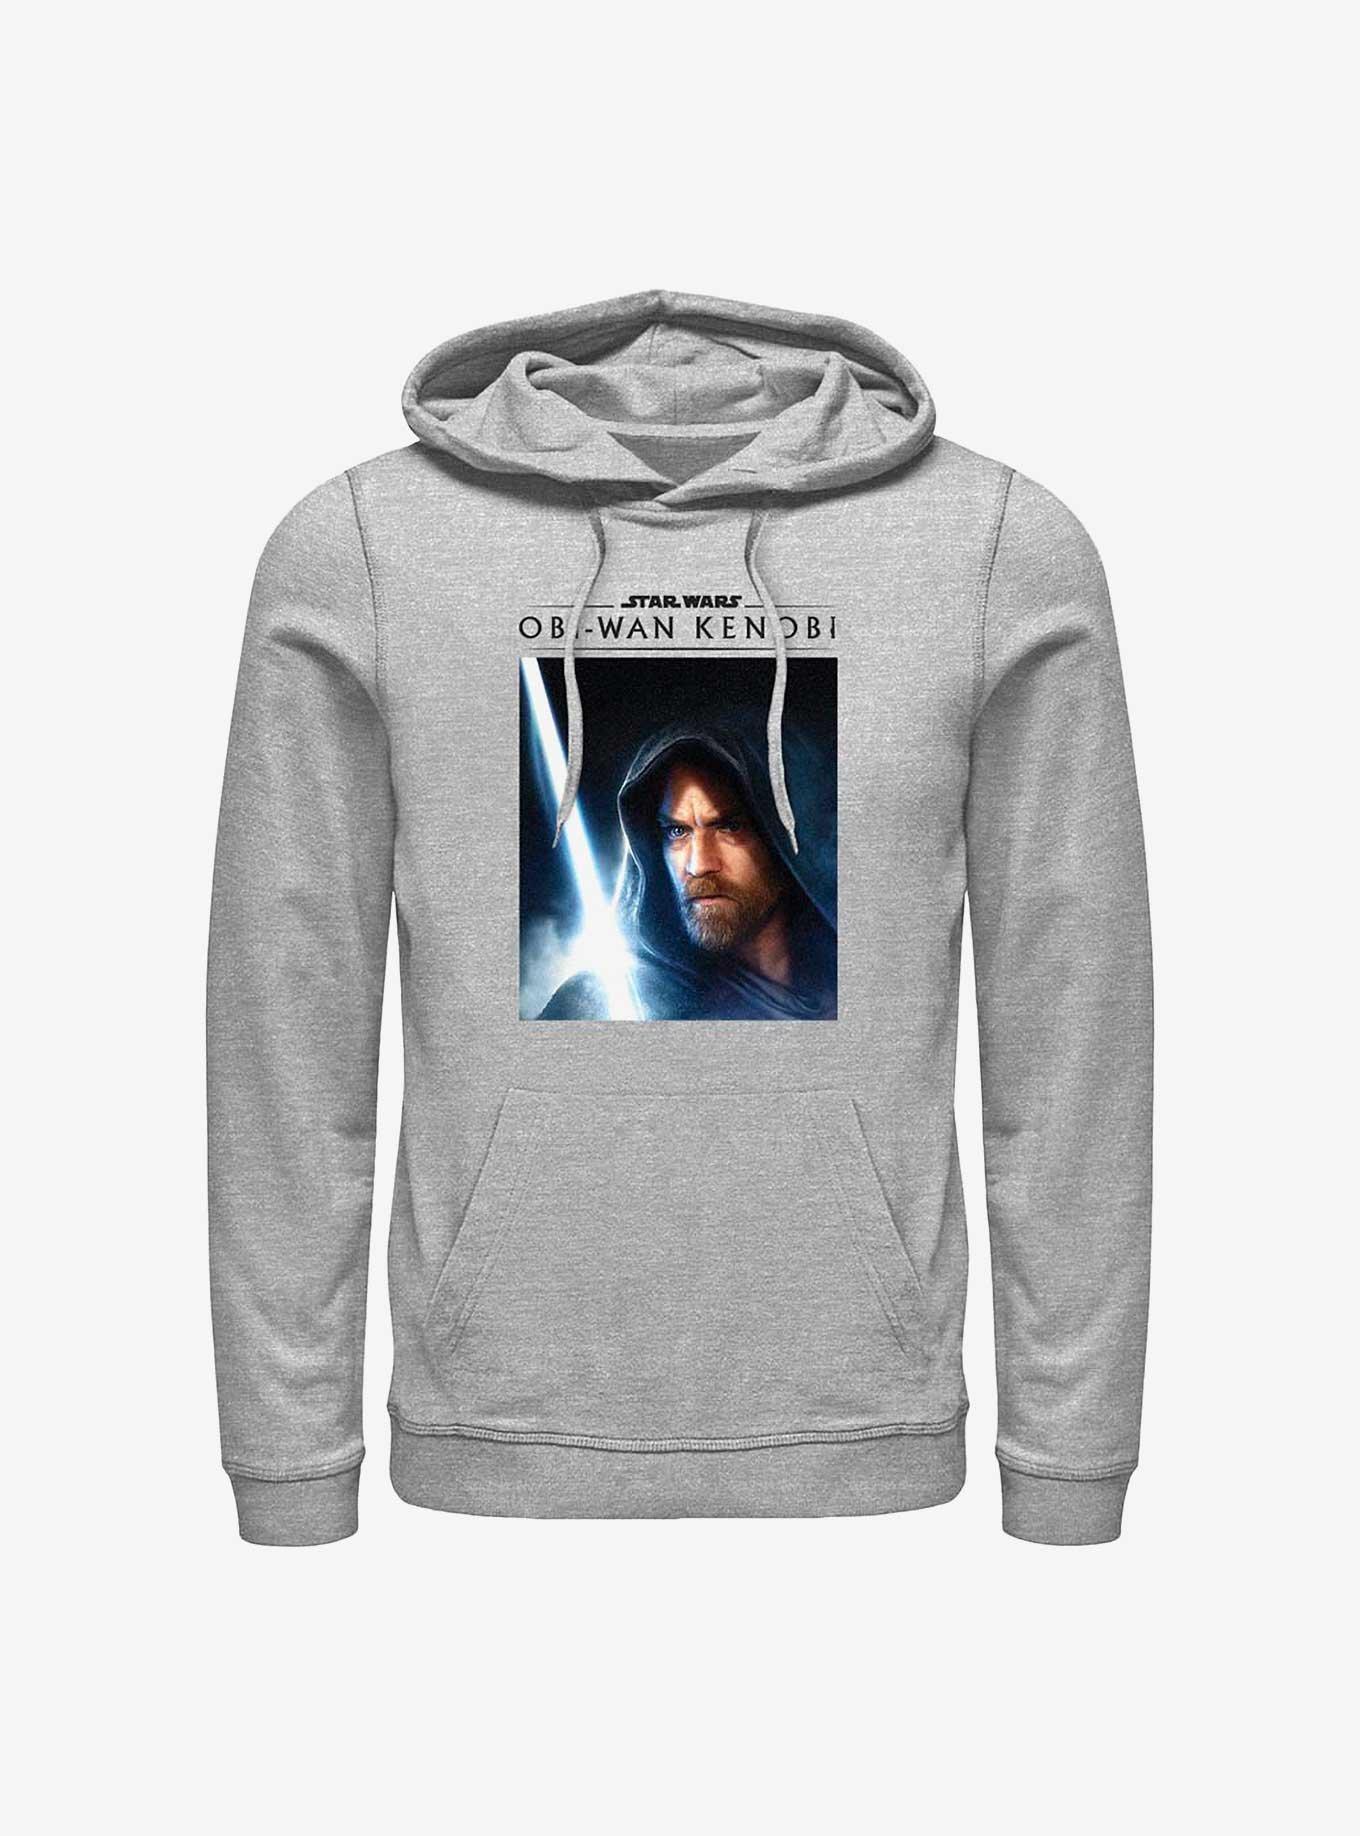 Star Wars Obi-Wan Kenobi Close-Up Sweatshirt, ATH HTR, hi-res